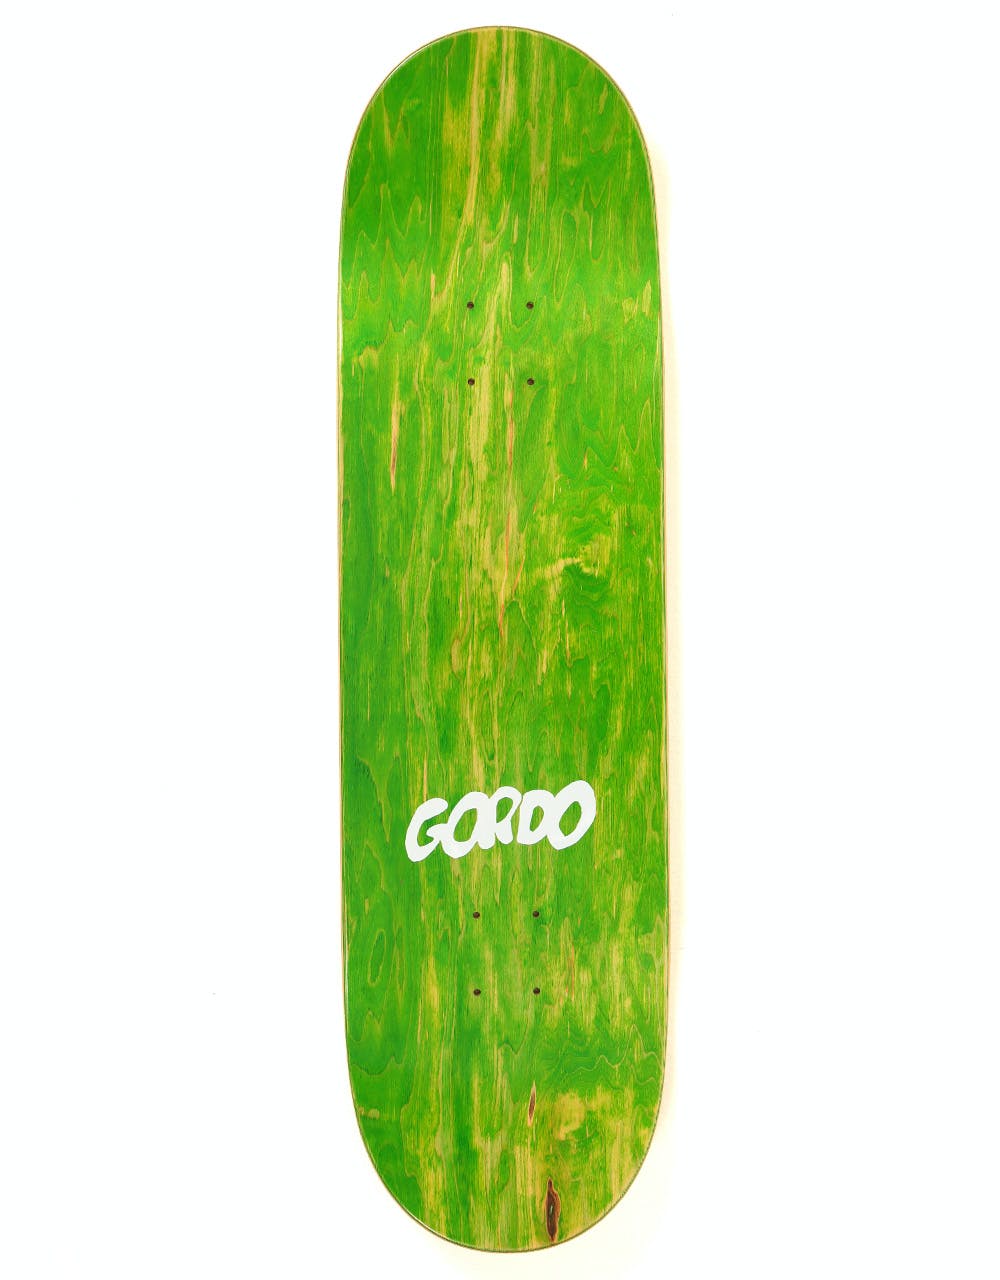 Lovenskate Thackeray Gordo Skateboard Deck - 8.8"